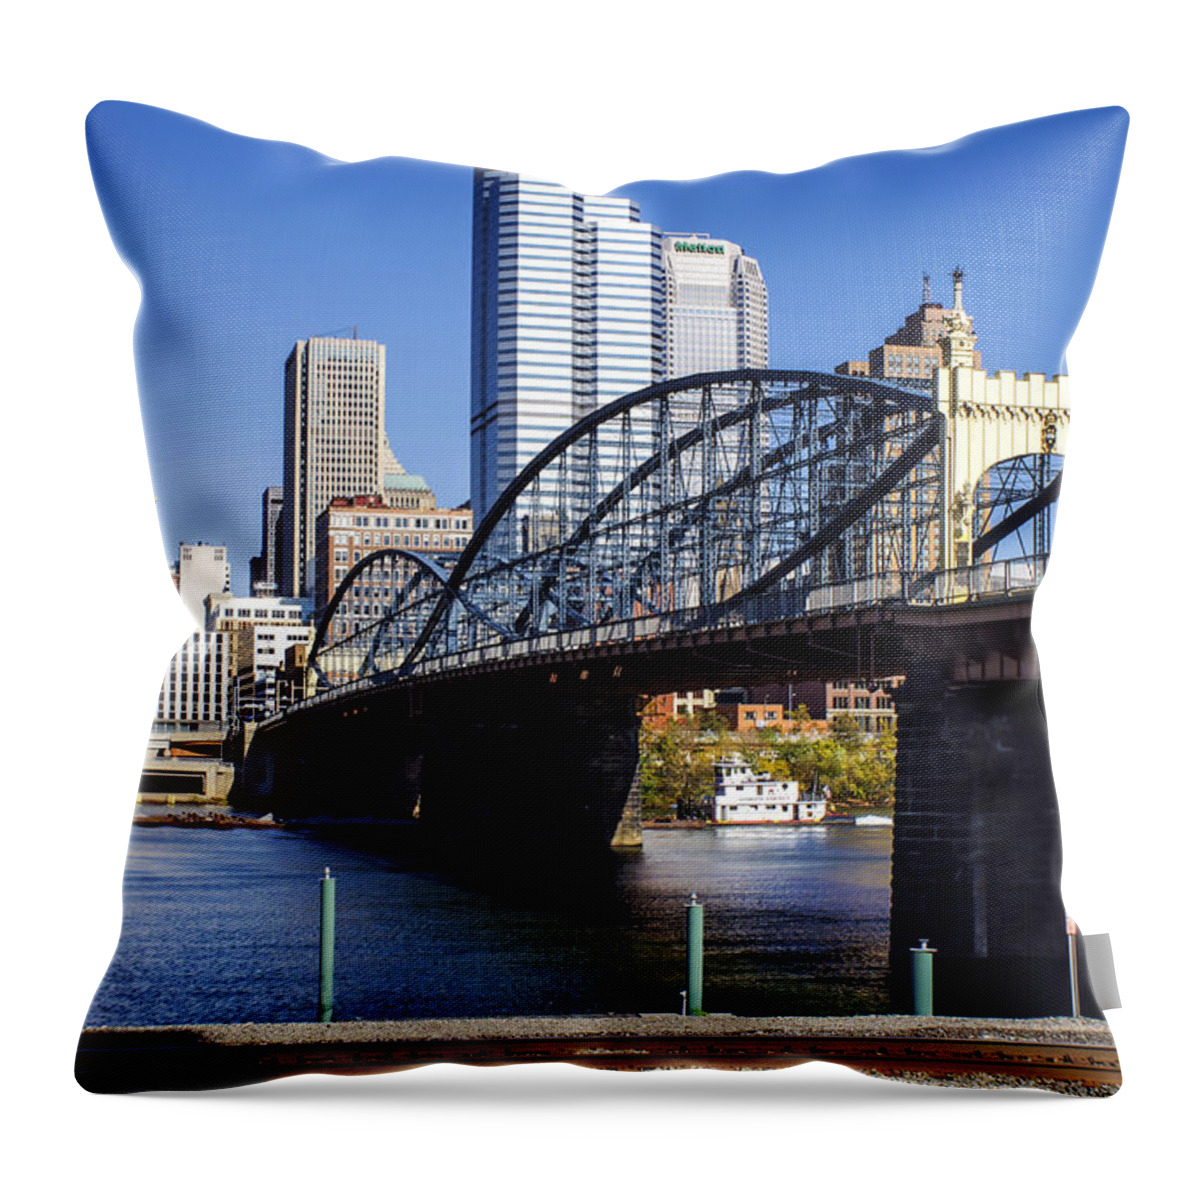 Smithfield Street Bridge Throw Pillow featuring the photograph Pittsburgh Smithfield Street Bridge by Michelle Joseph-Long